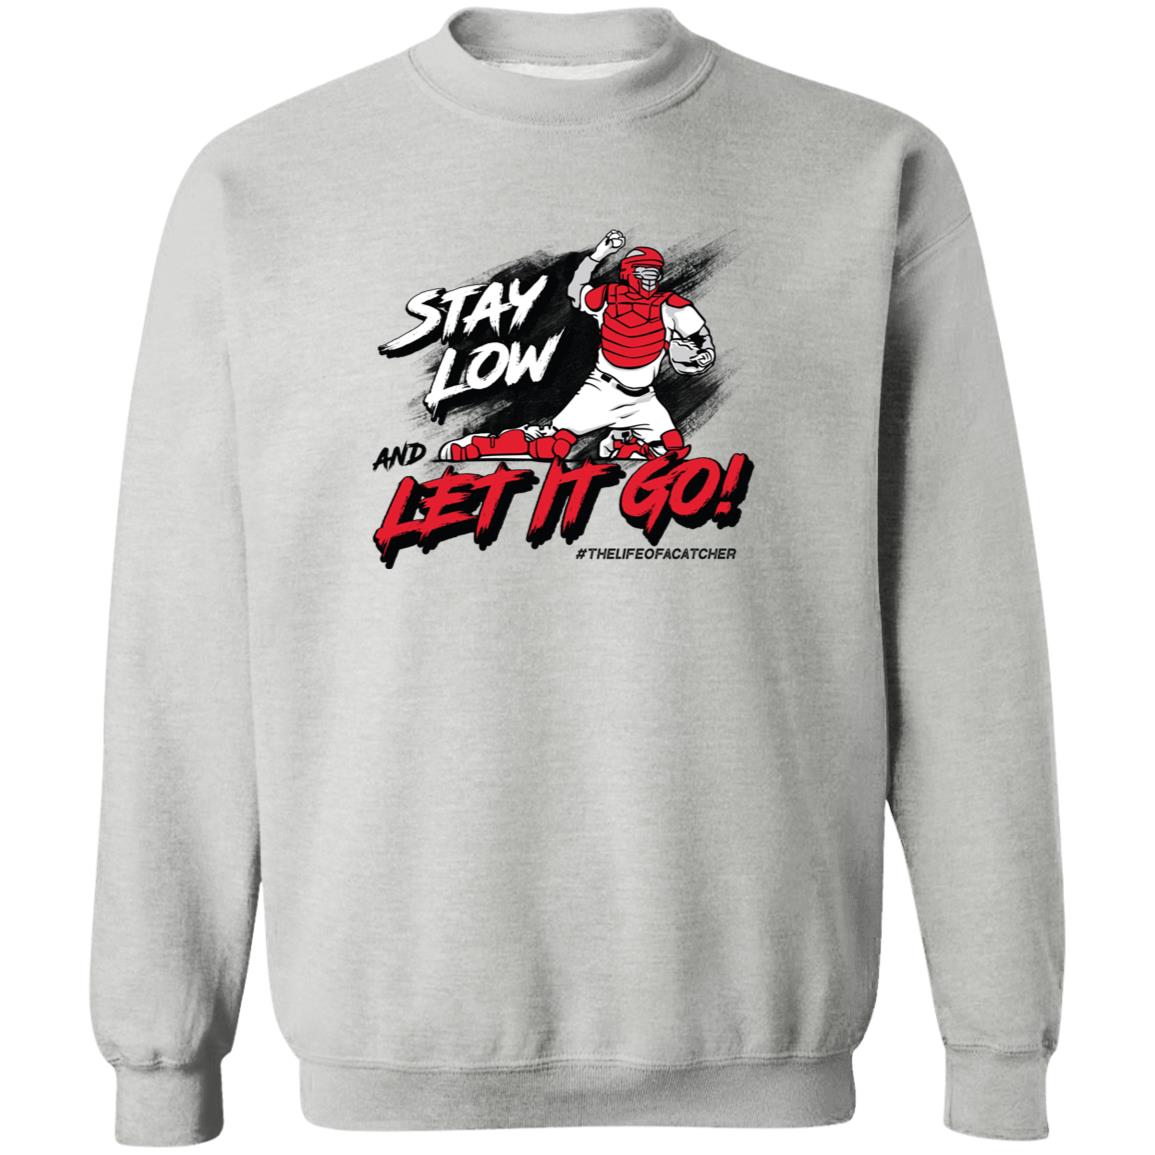 Stay Low & Let It Go Crewneck Sweatshirt - Grey